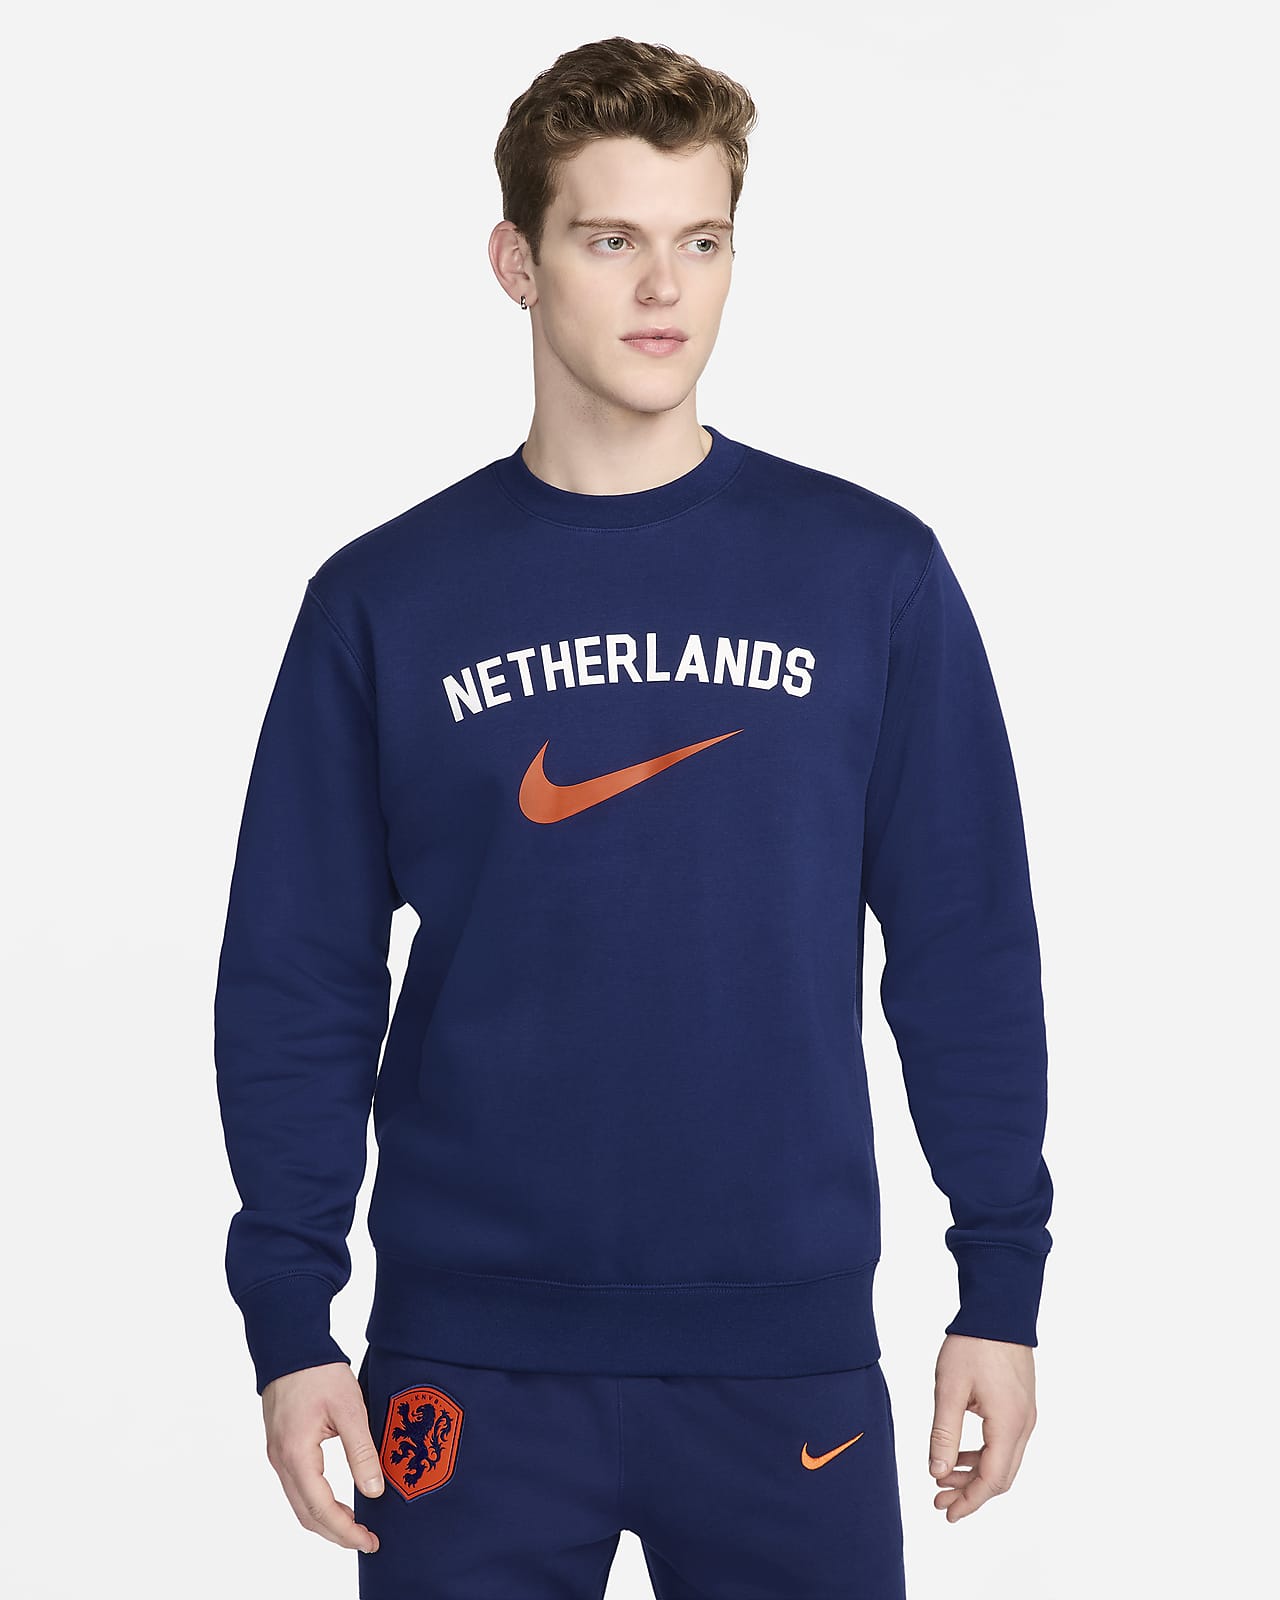 Niederlande Club Fleece-Sweatshirt mit Rundhalsausschnitt (Herren)